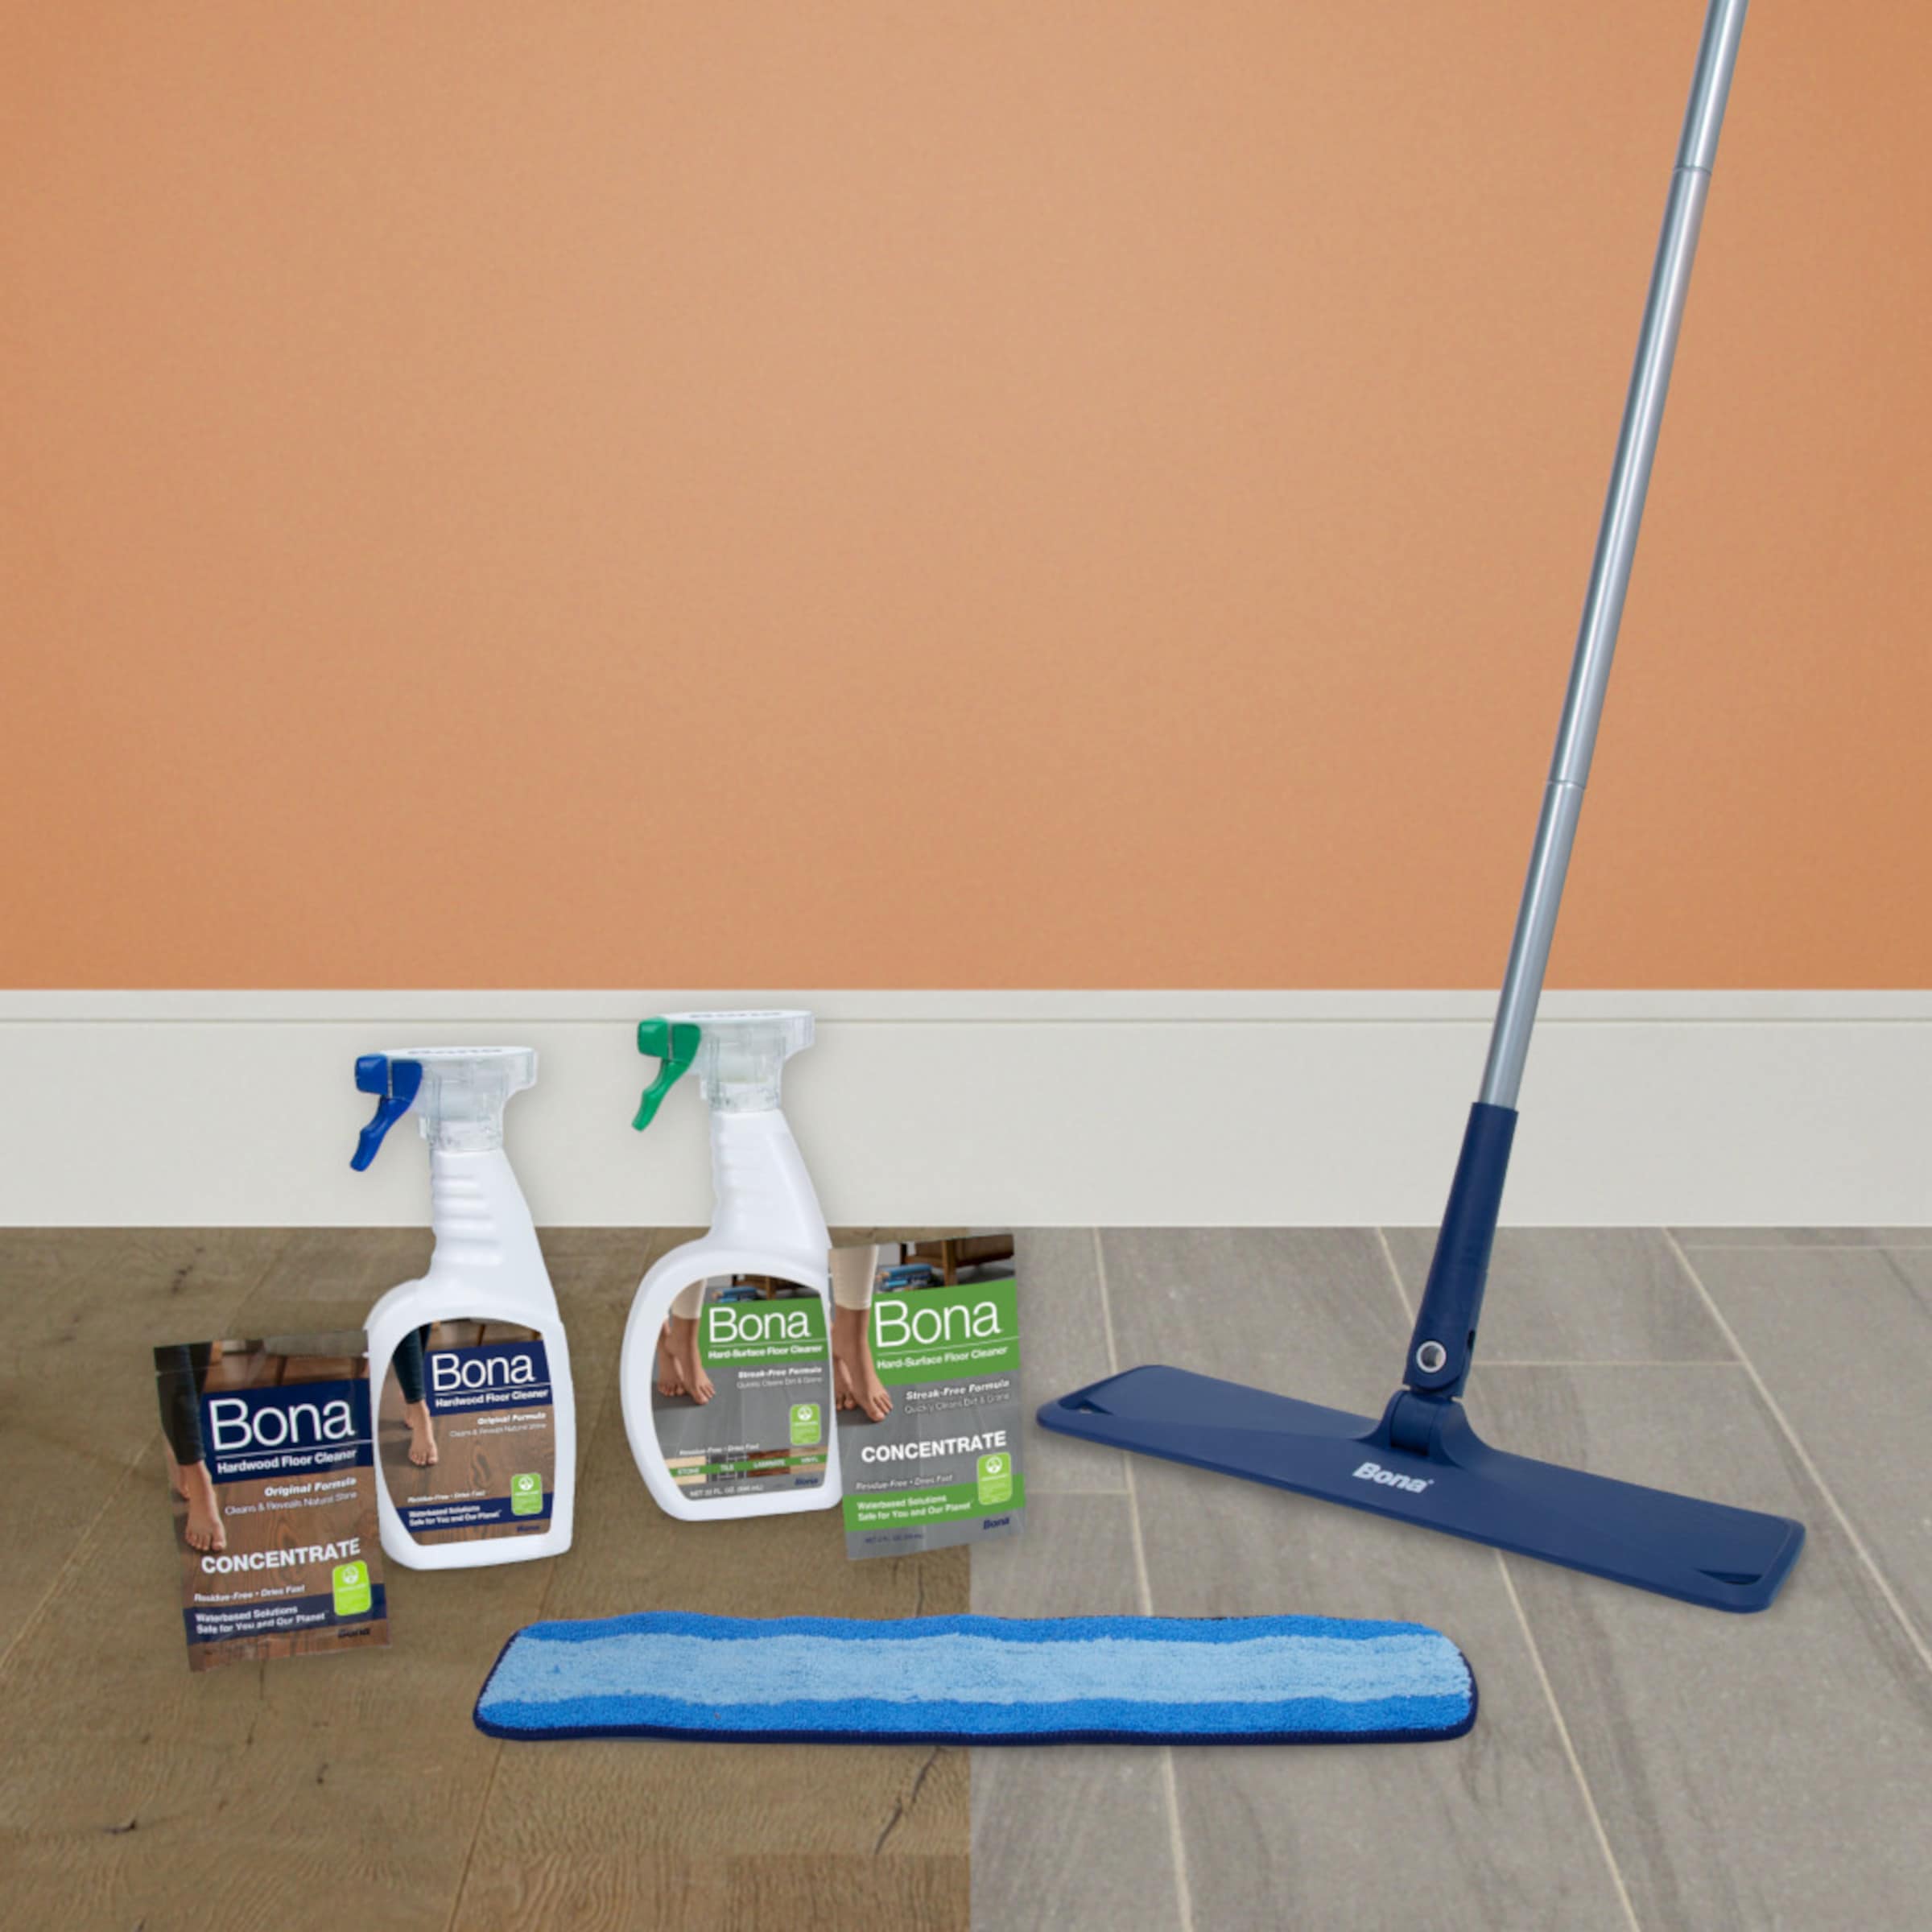 Bona Spray Mop, Premium, for Hardwood Floors, Original Formula